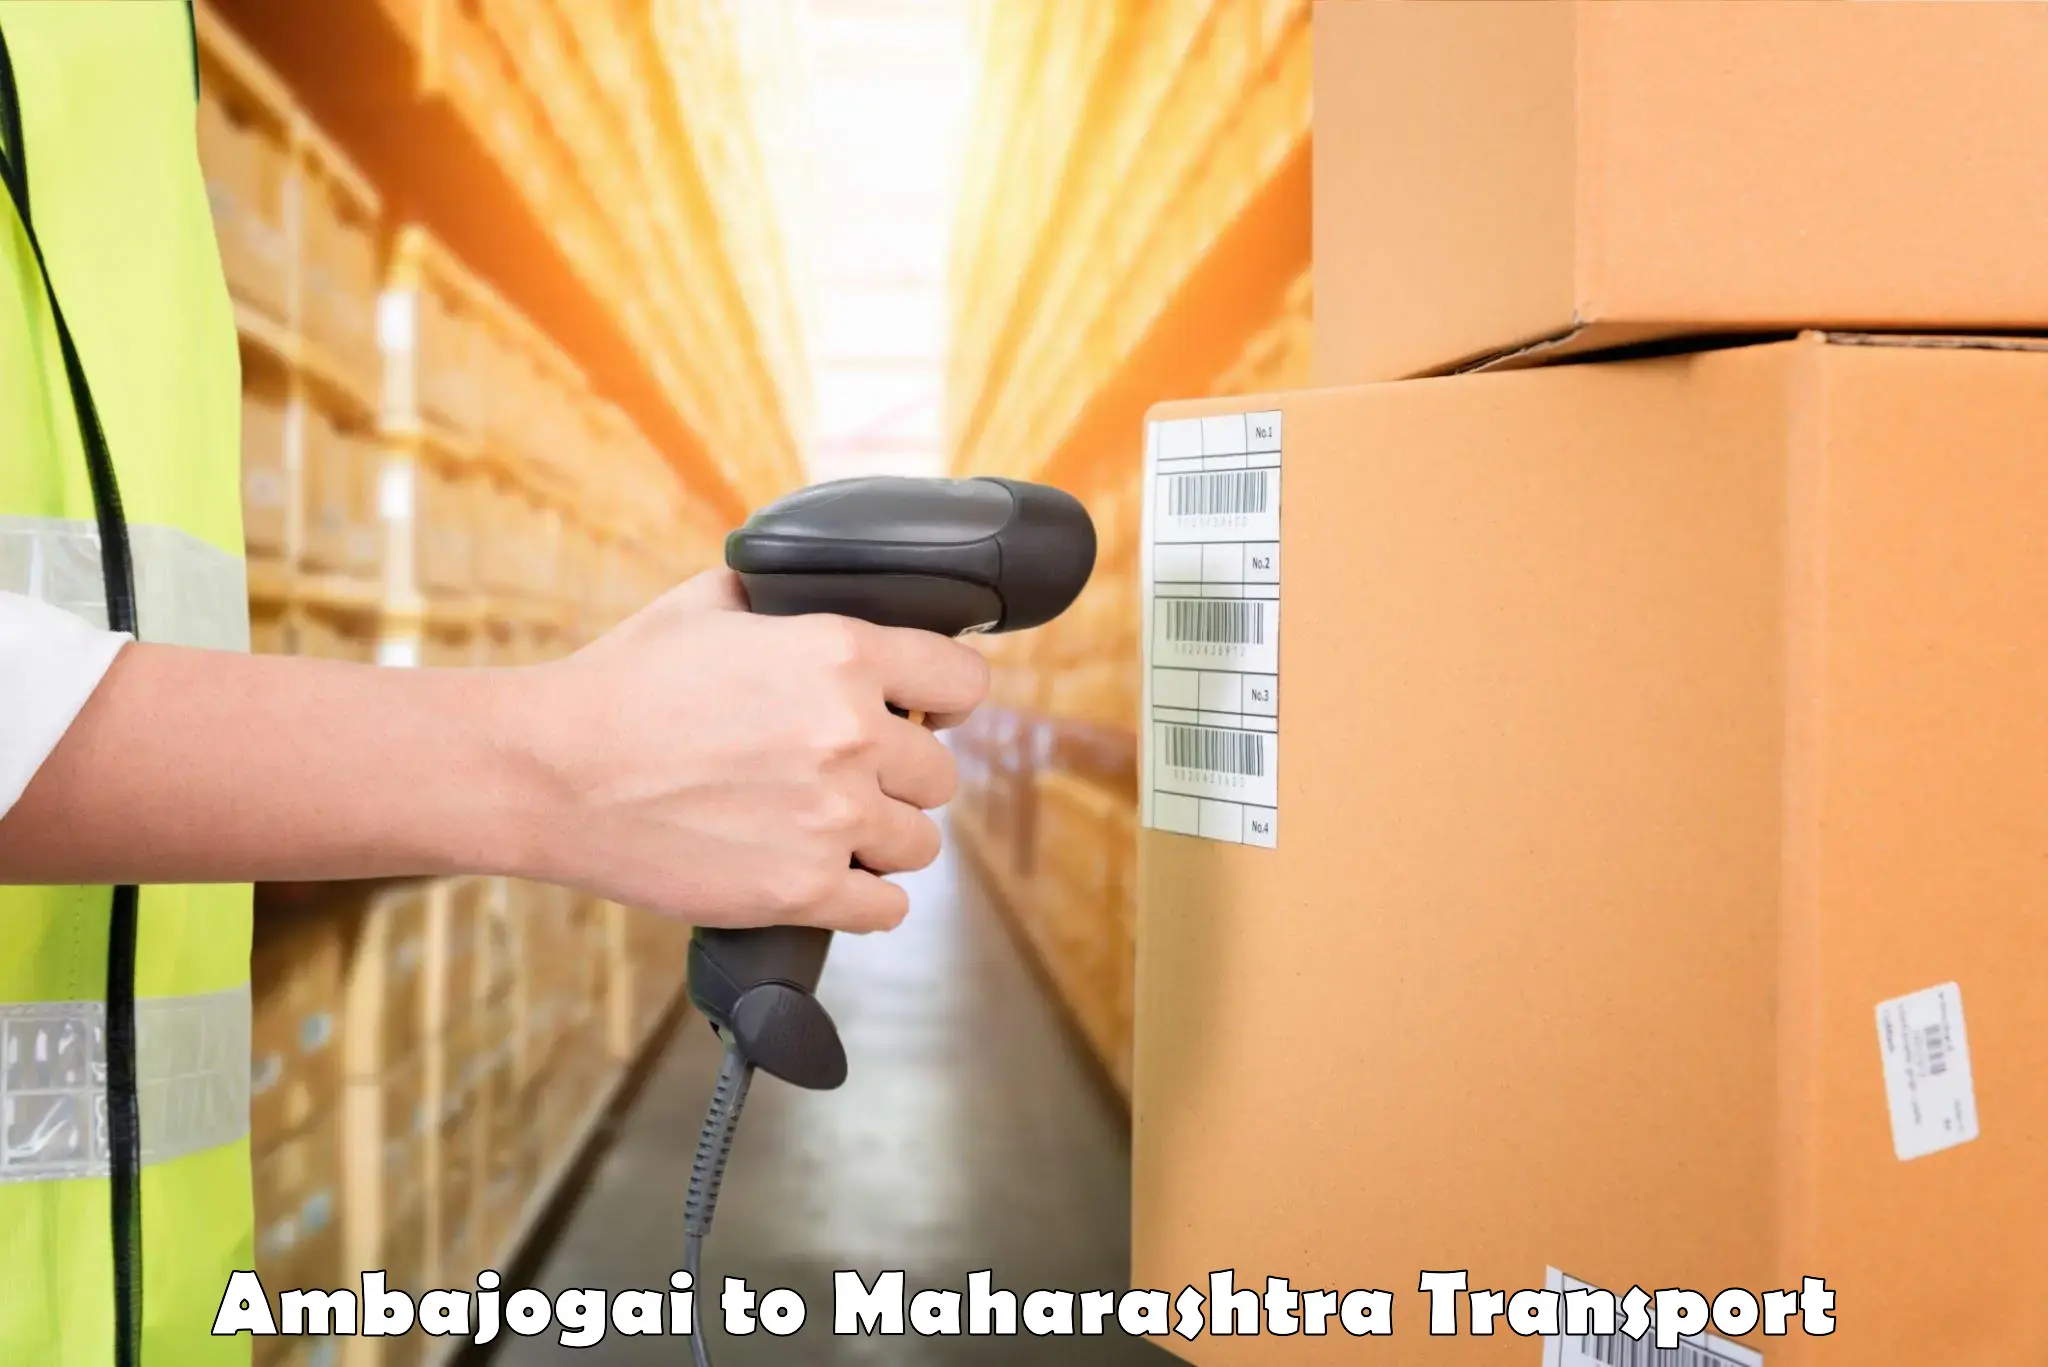 Truck transport companies in India Ambajogai to Bhiwandi